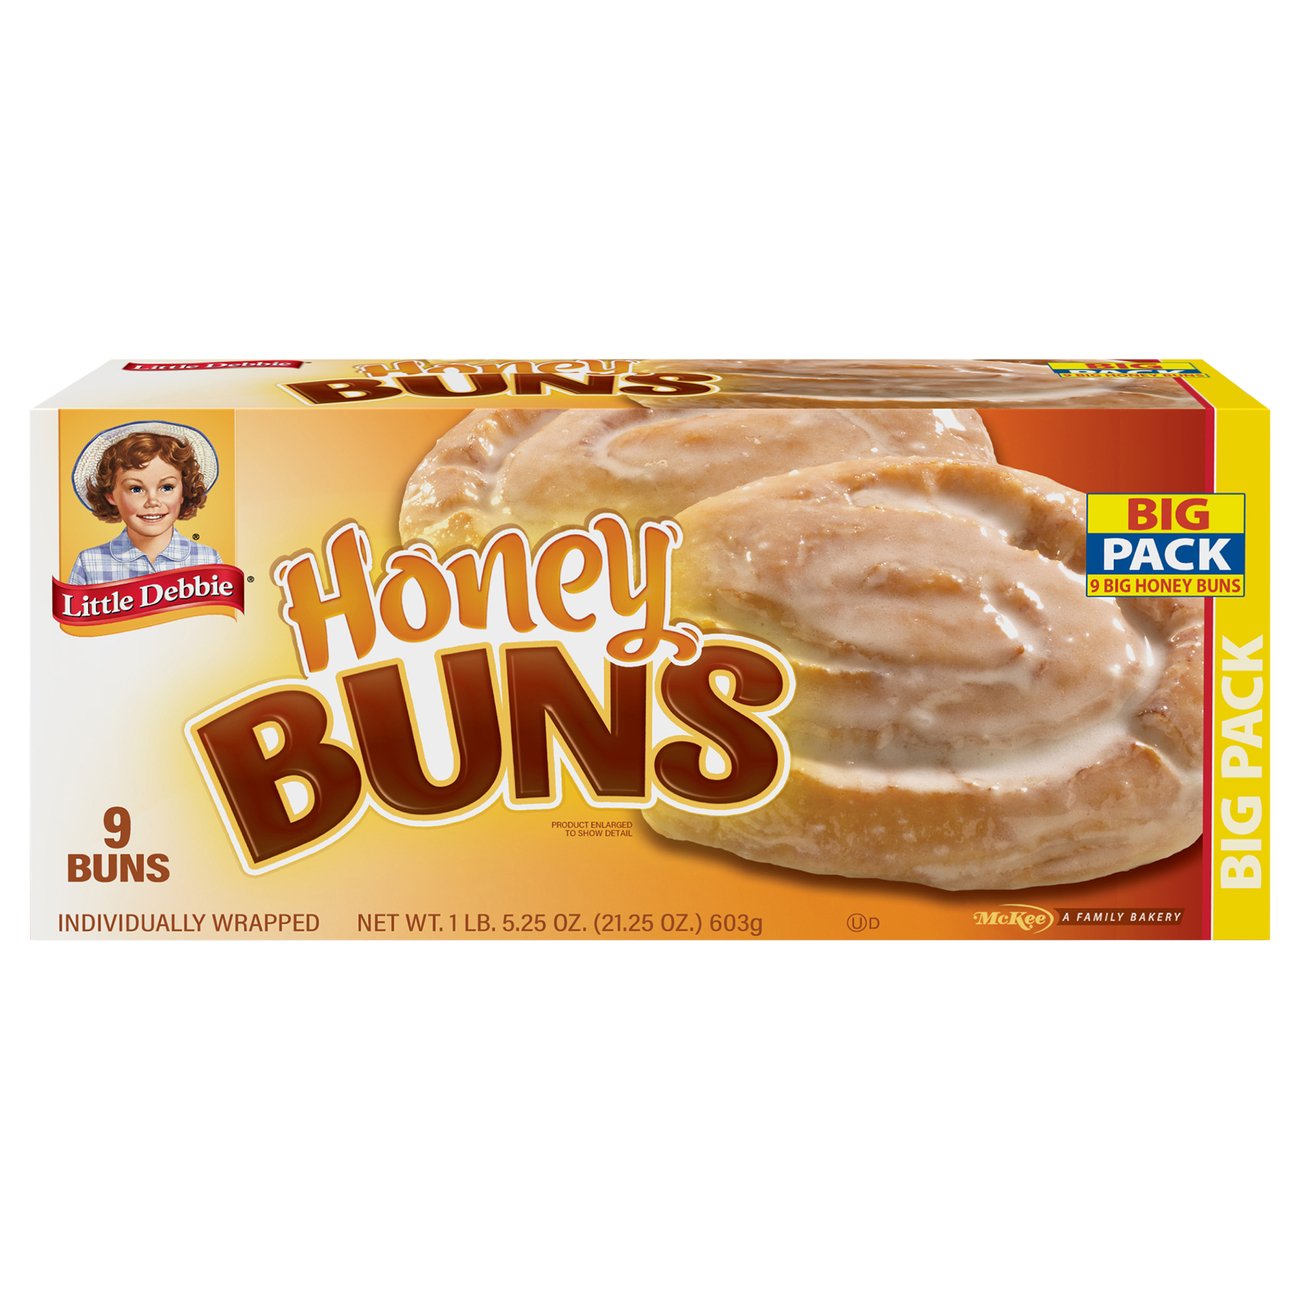 Little Debbie Honey Buns Breakfast Pastries - Big Pack - Shop